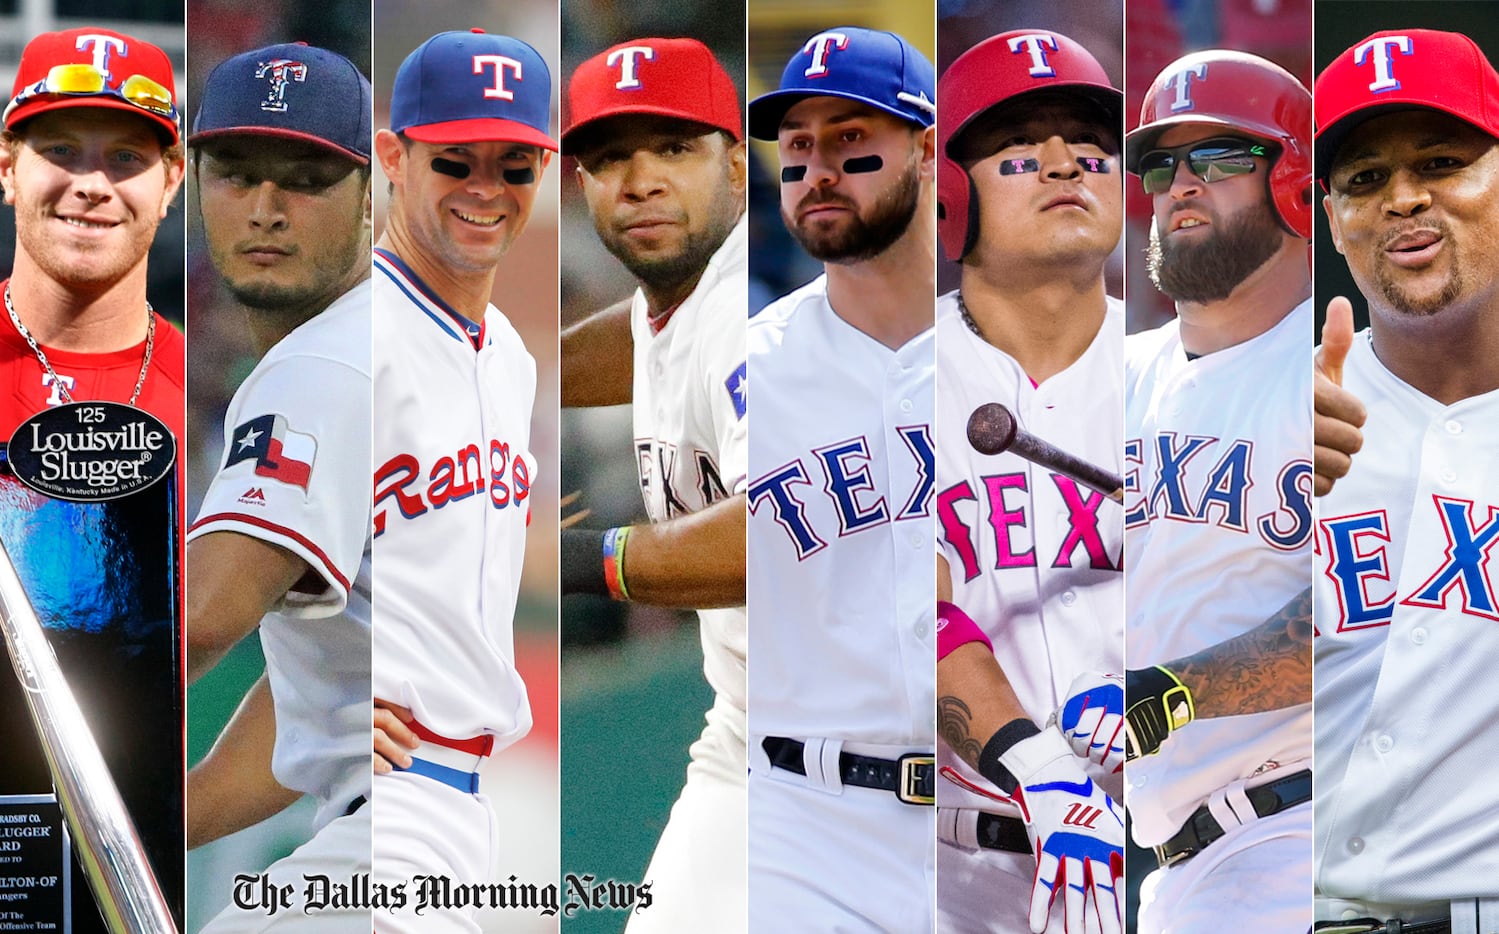 Josh Hamilton returns to Texas Rangers lineup after relapse – New